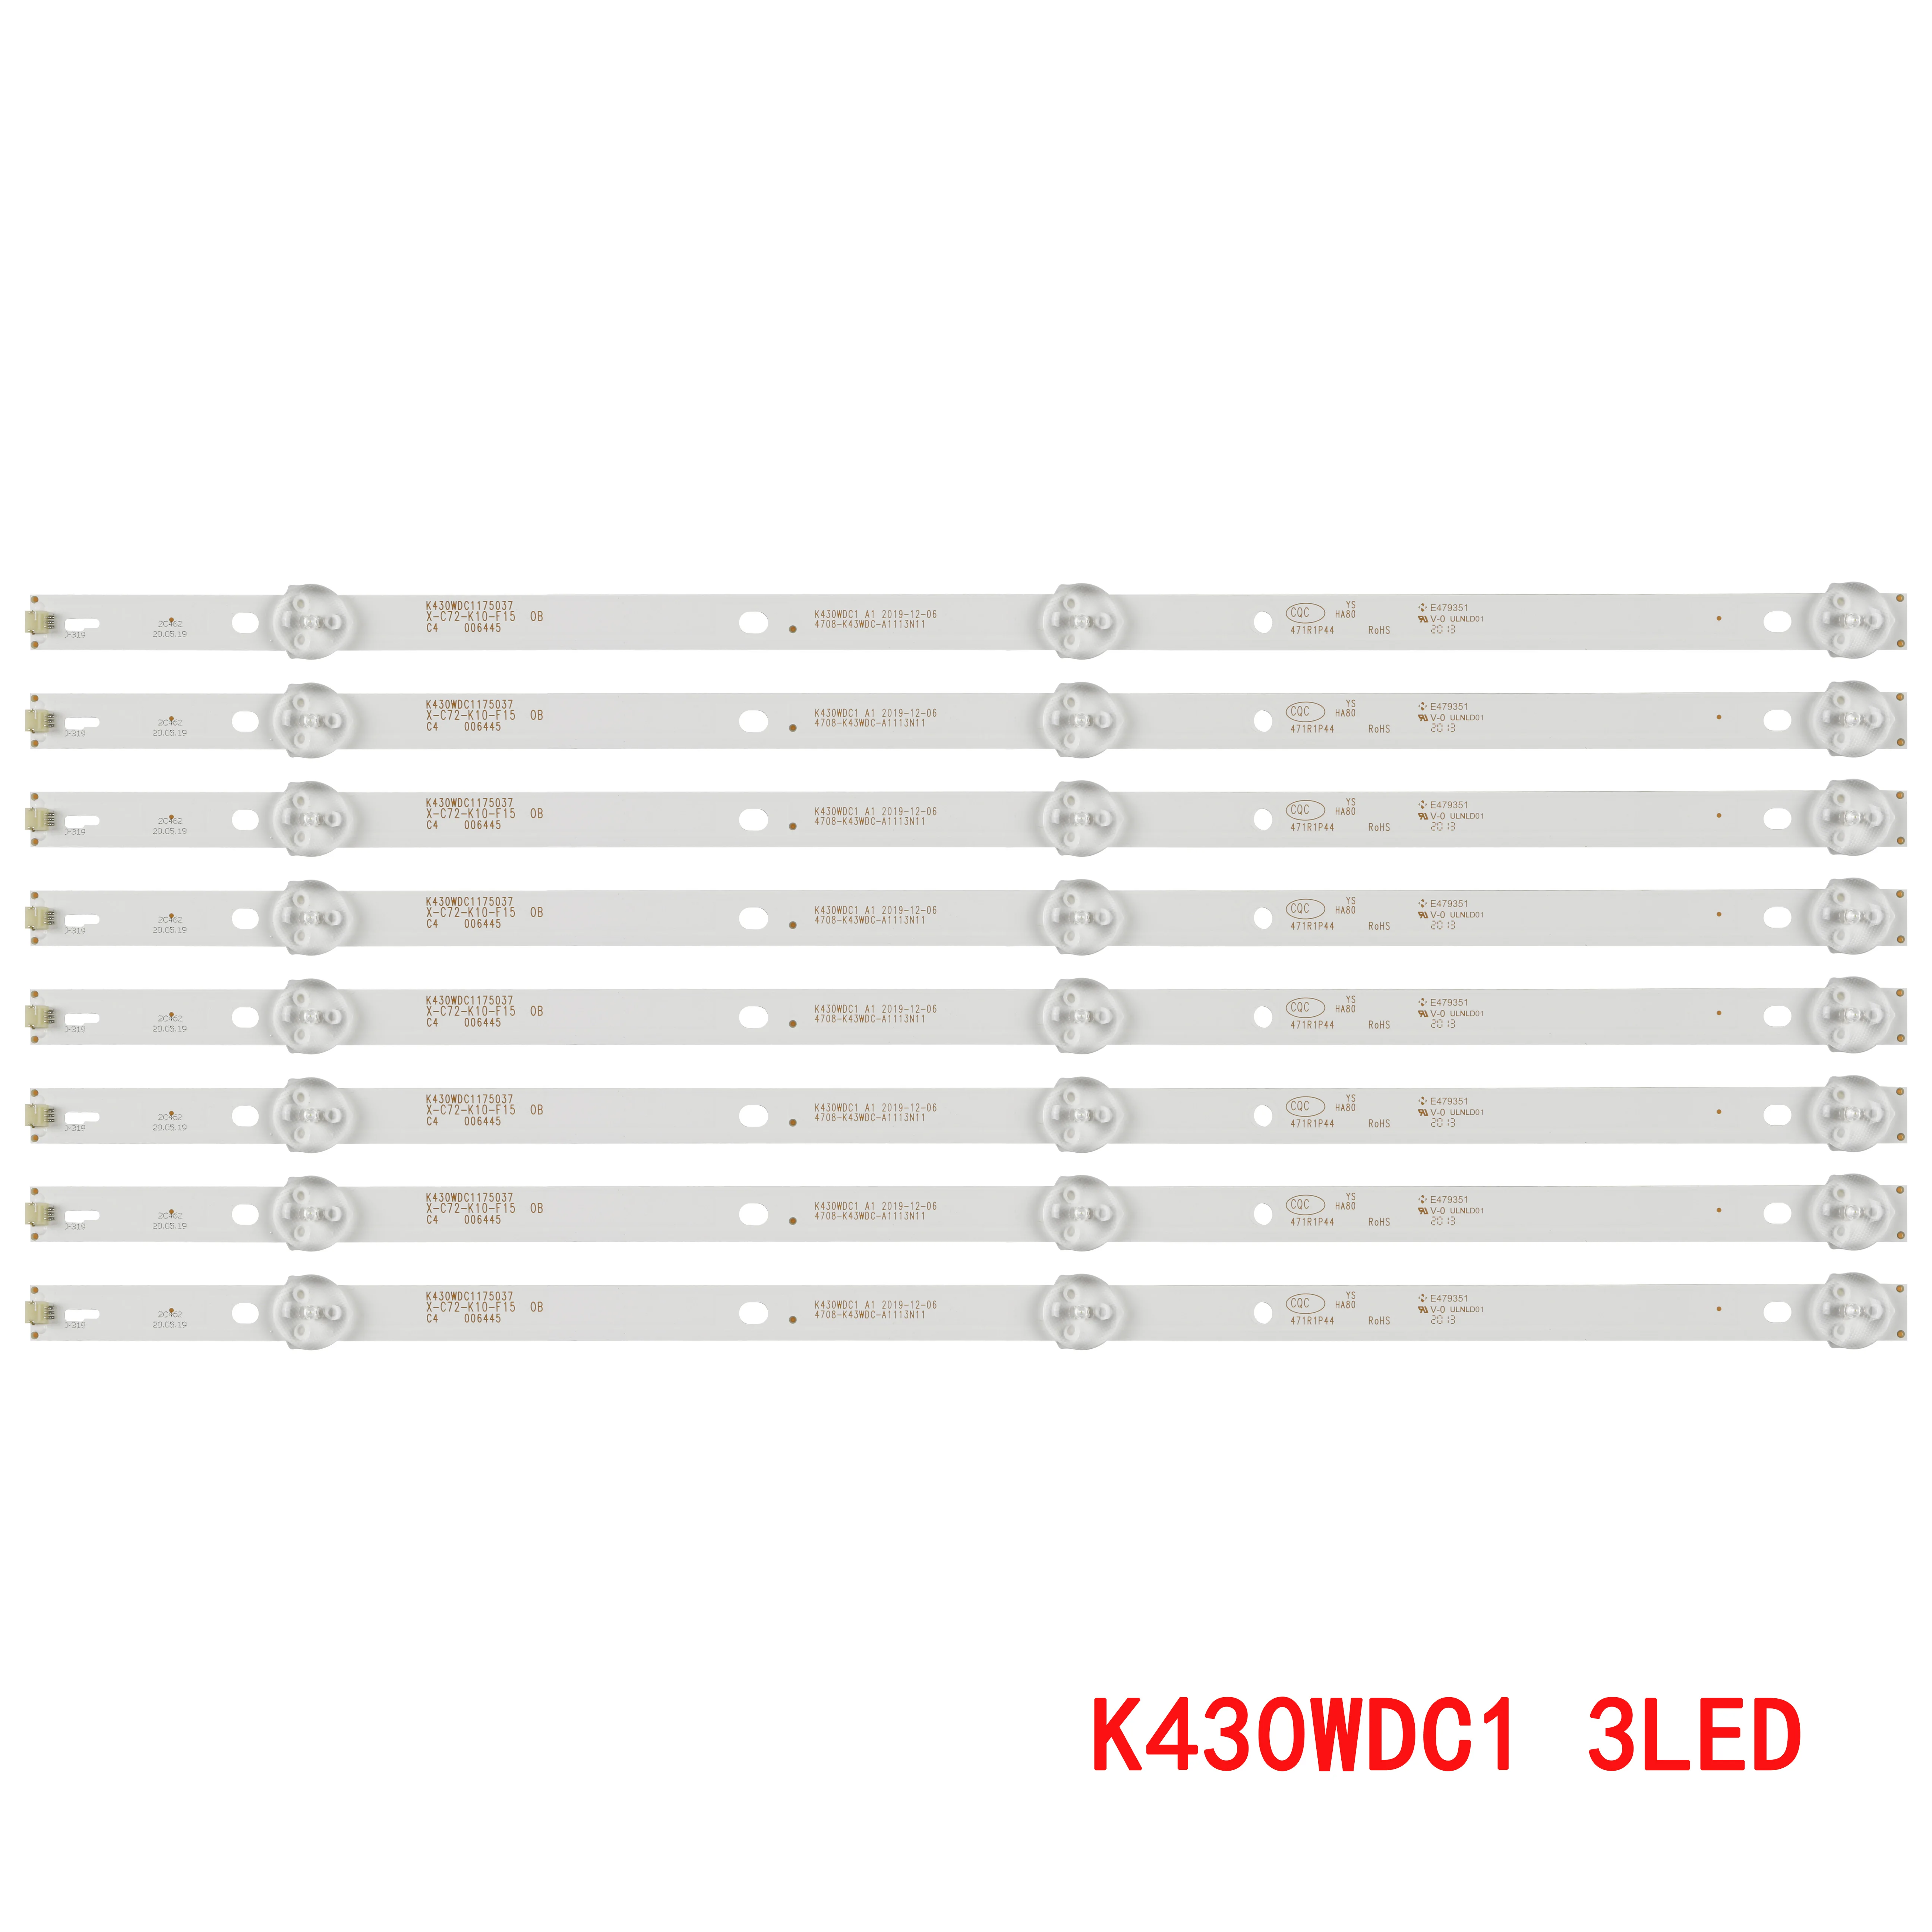 LED backlight strip for 43PFT4002 43DL4012N 43HFF5952 L43E6800 K430WDK3 K430WDC1 A1 A3 4708-K43WDC-A3113N11 A1113N11 A2113N11